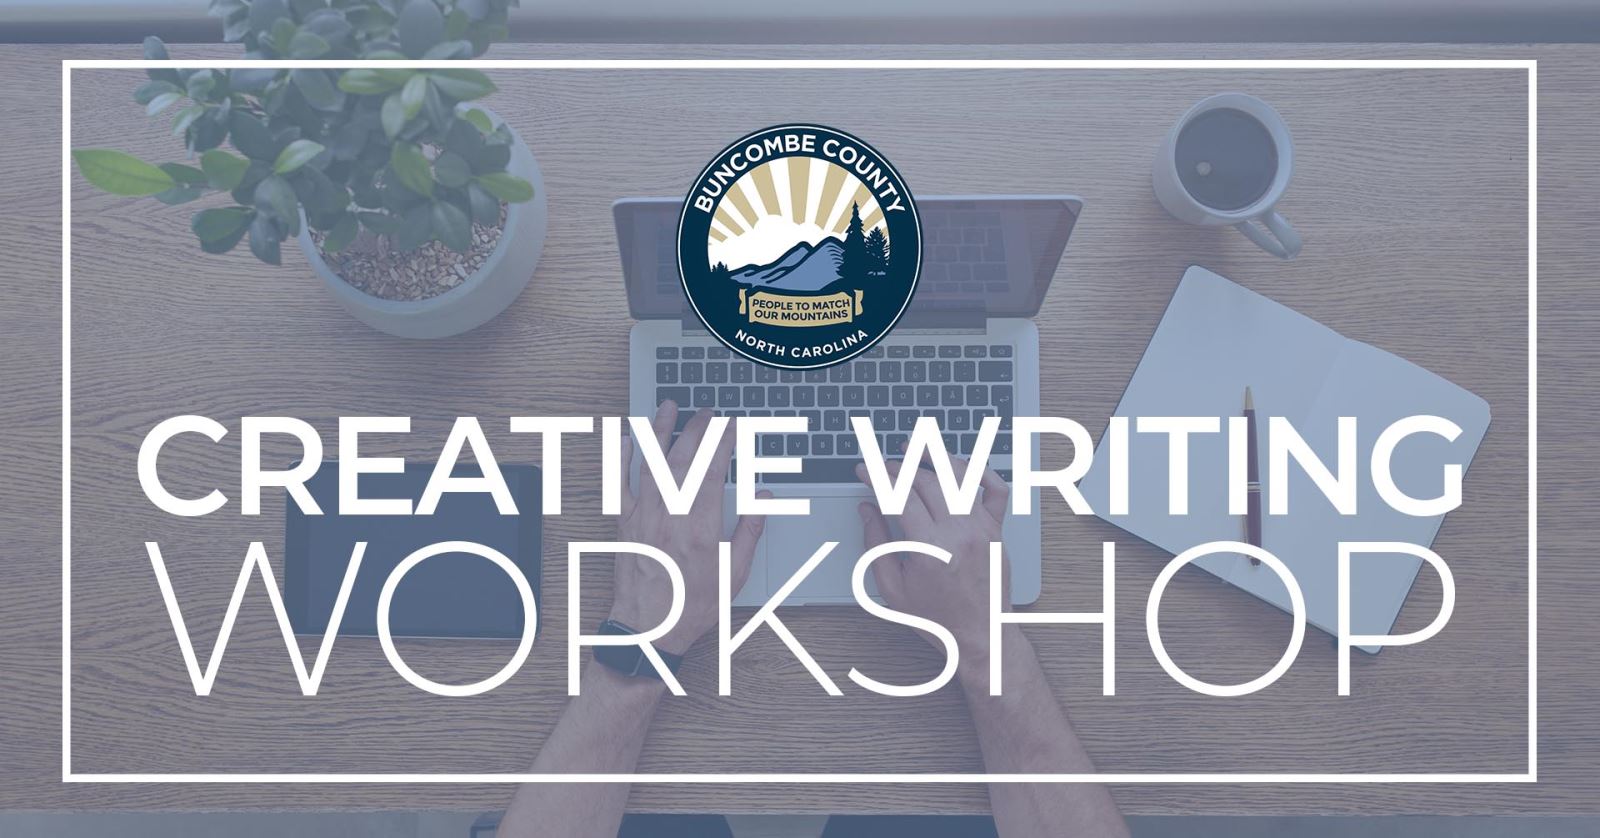 Creative Writing Workshop Graphic